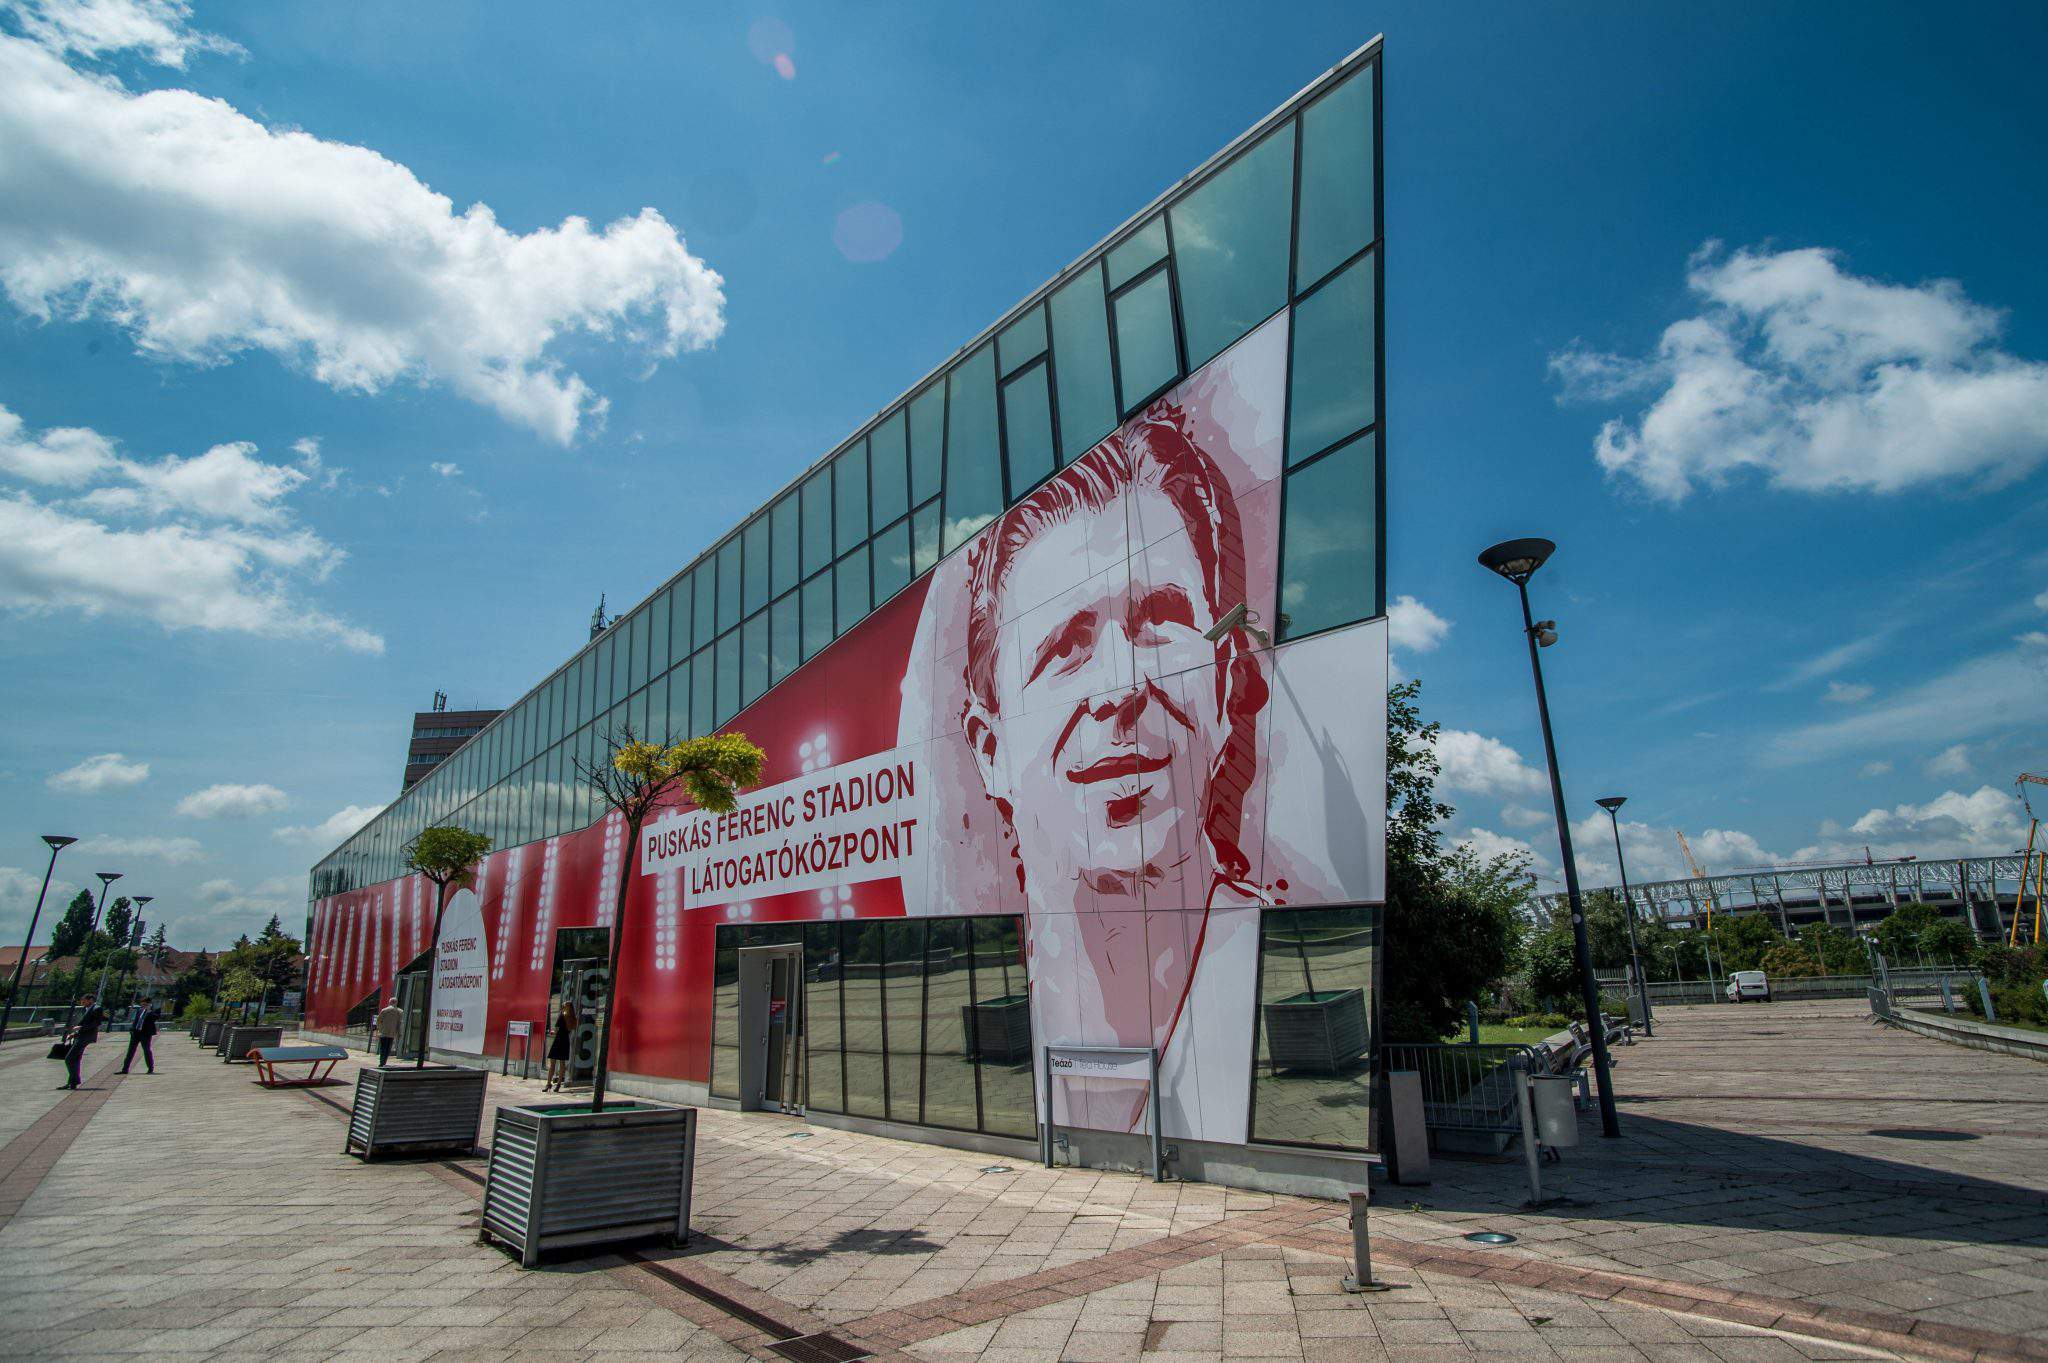 Inauguran centro de visitantes Estadio Puskas Ferenc